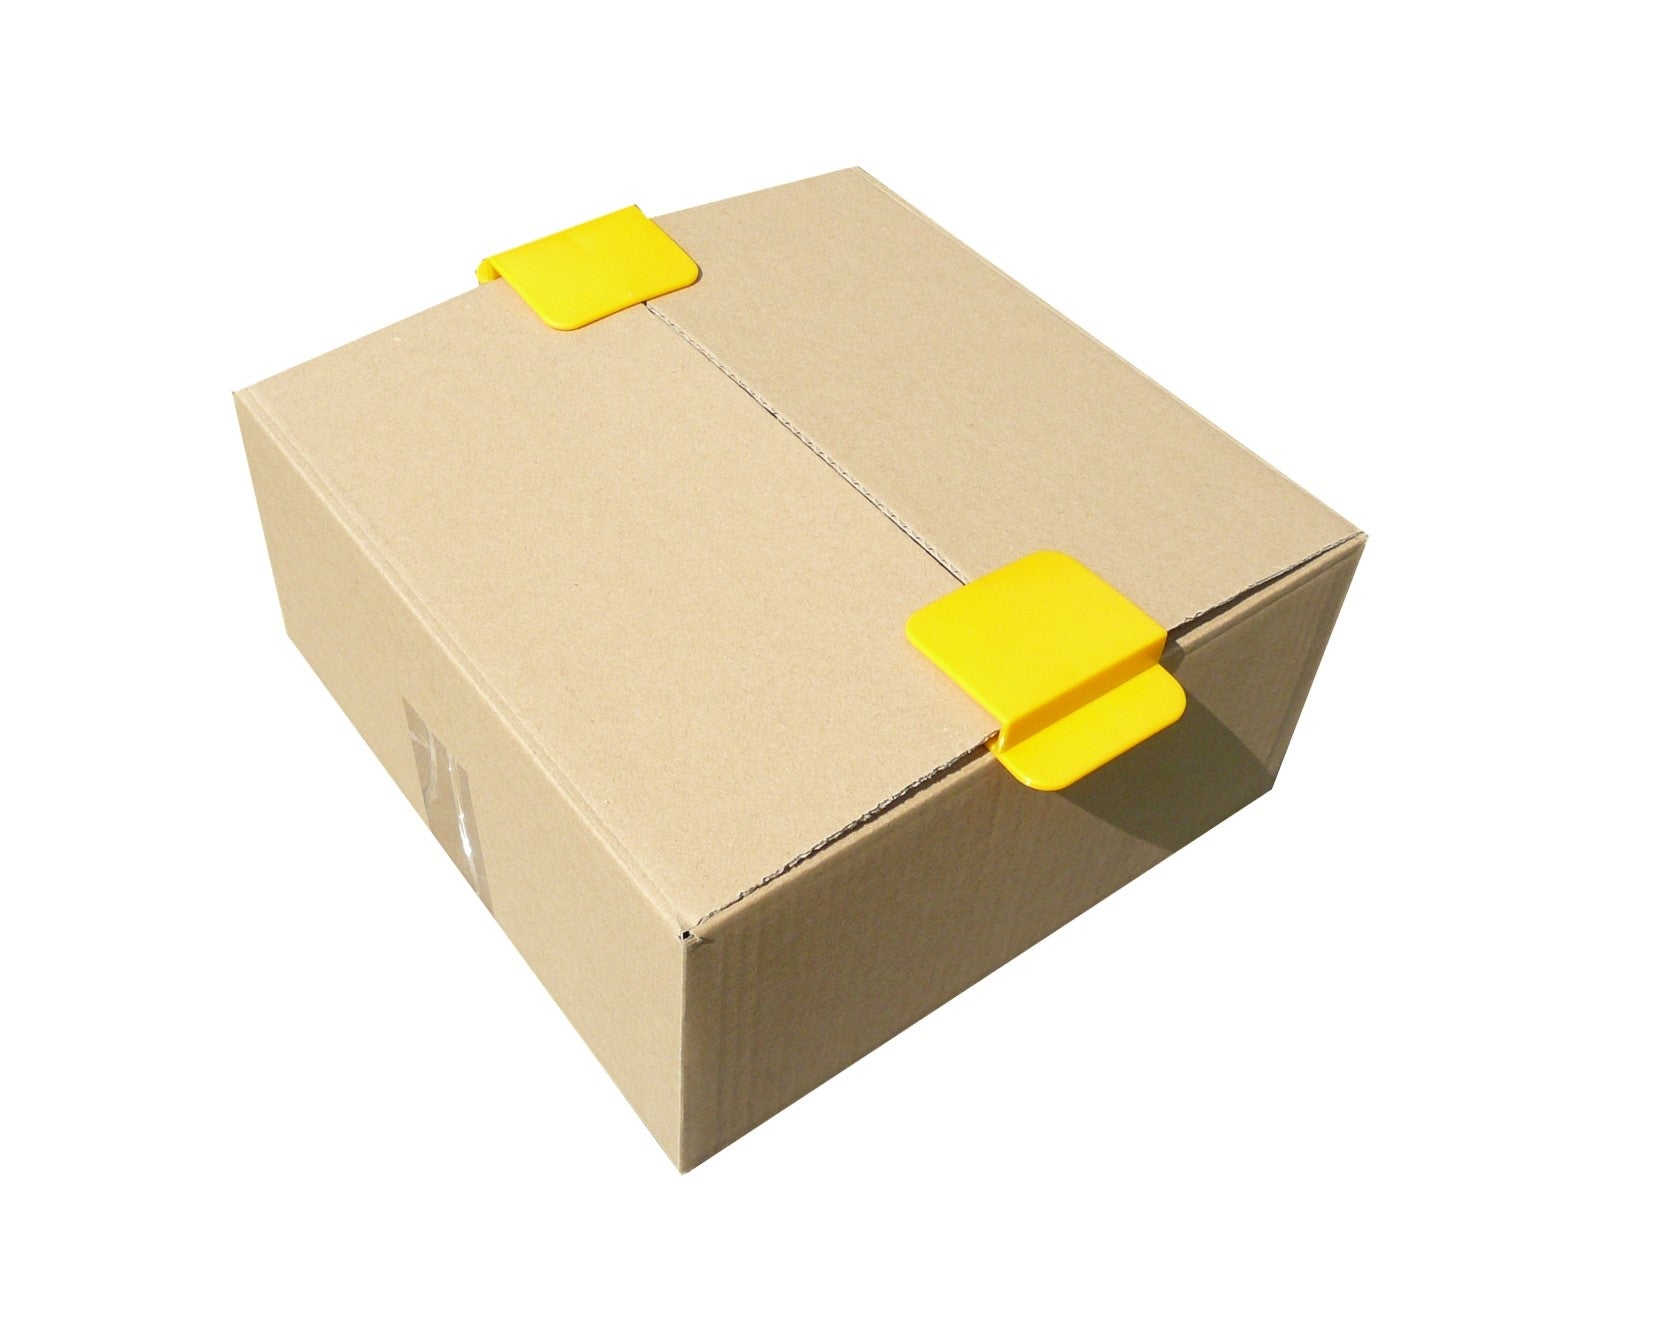 4er-Set Kartonklammer, Kommissionierhilfe, Entnahmehilfe, Stapelhilfe für Kartons